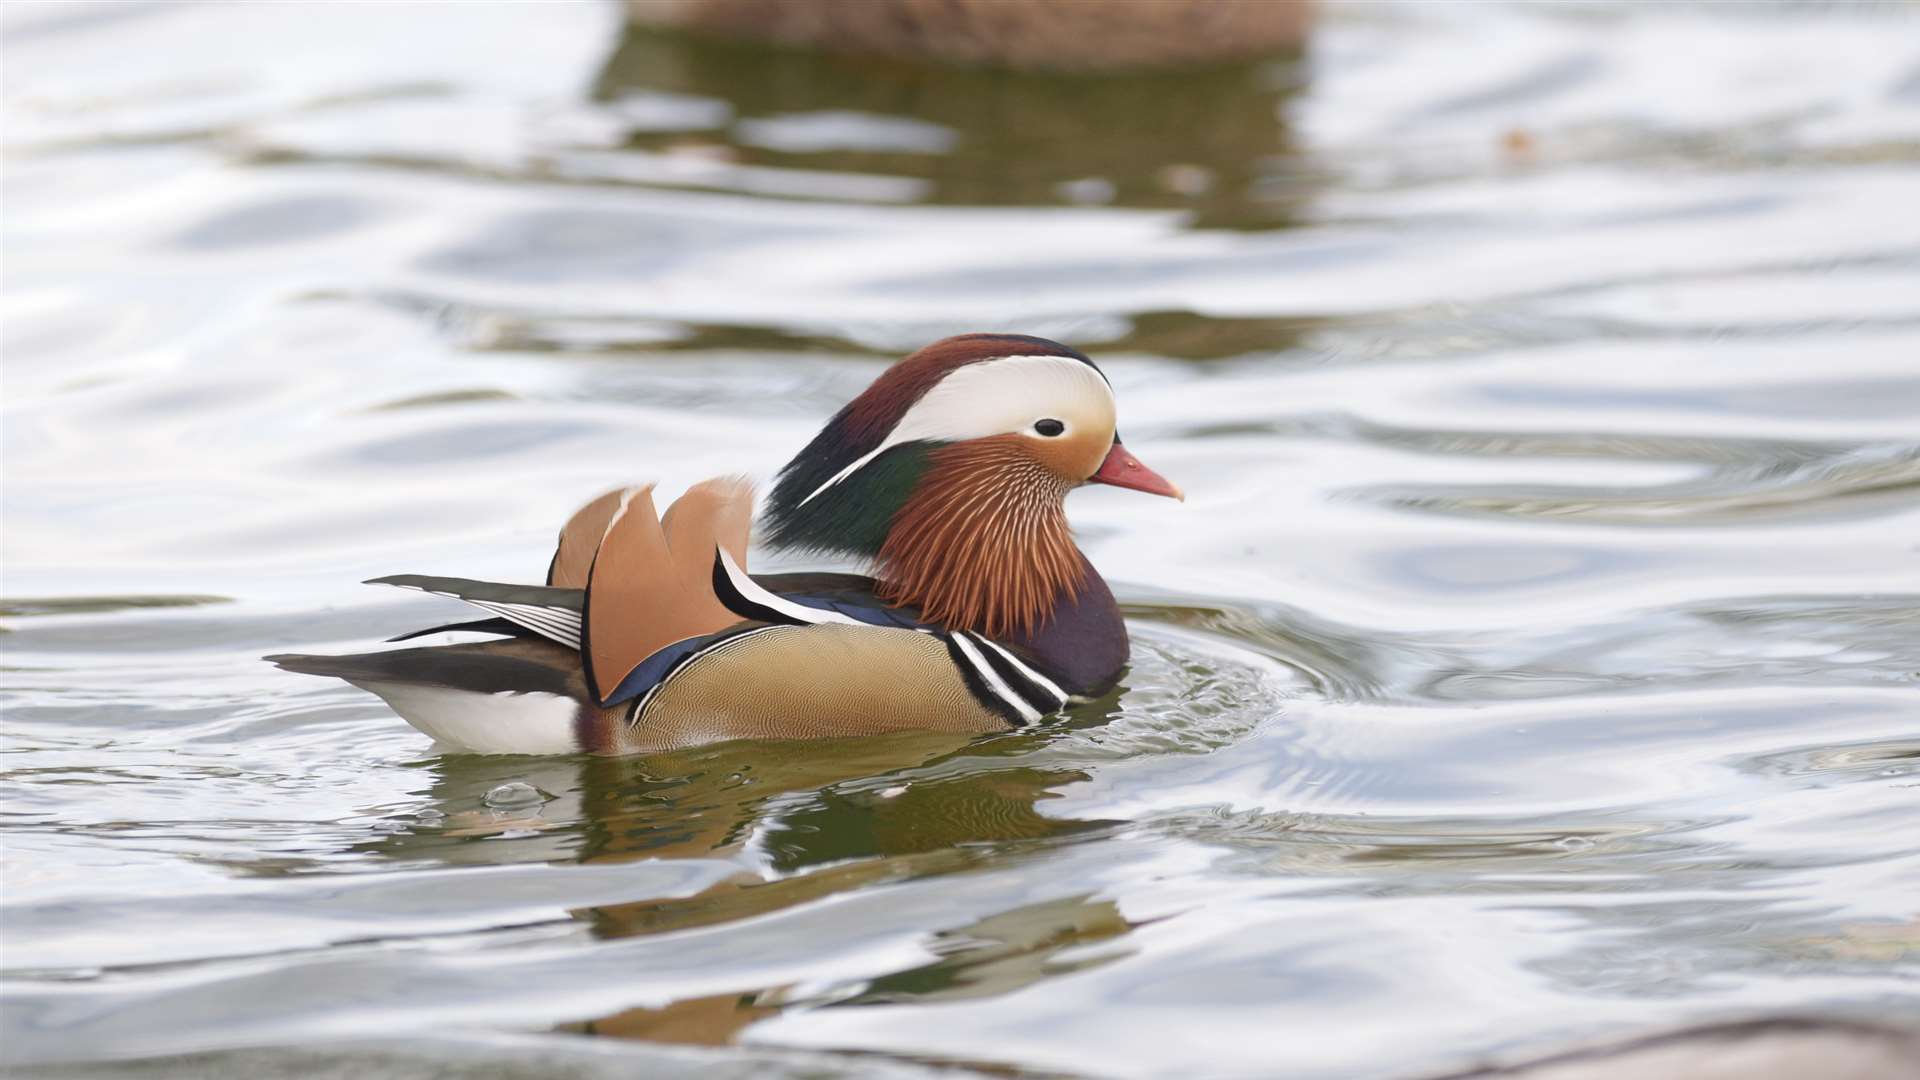 The striking male Mandarin duck in Memorial Park lake. Picture: Chris Davey